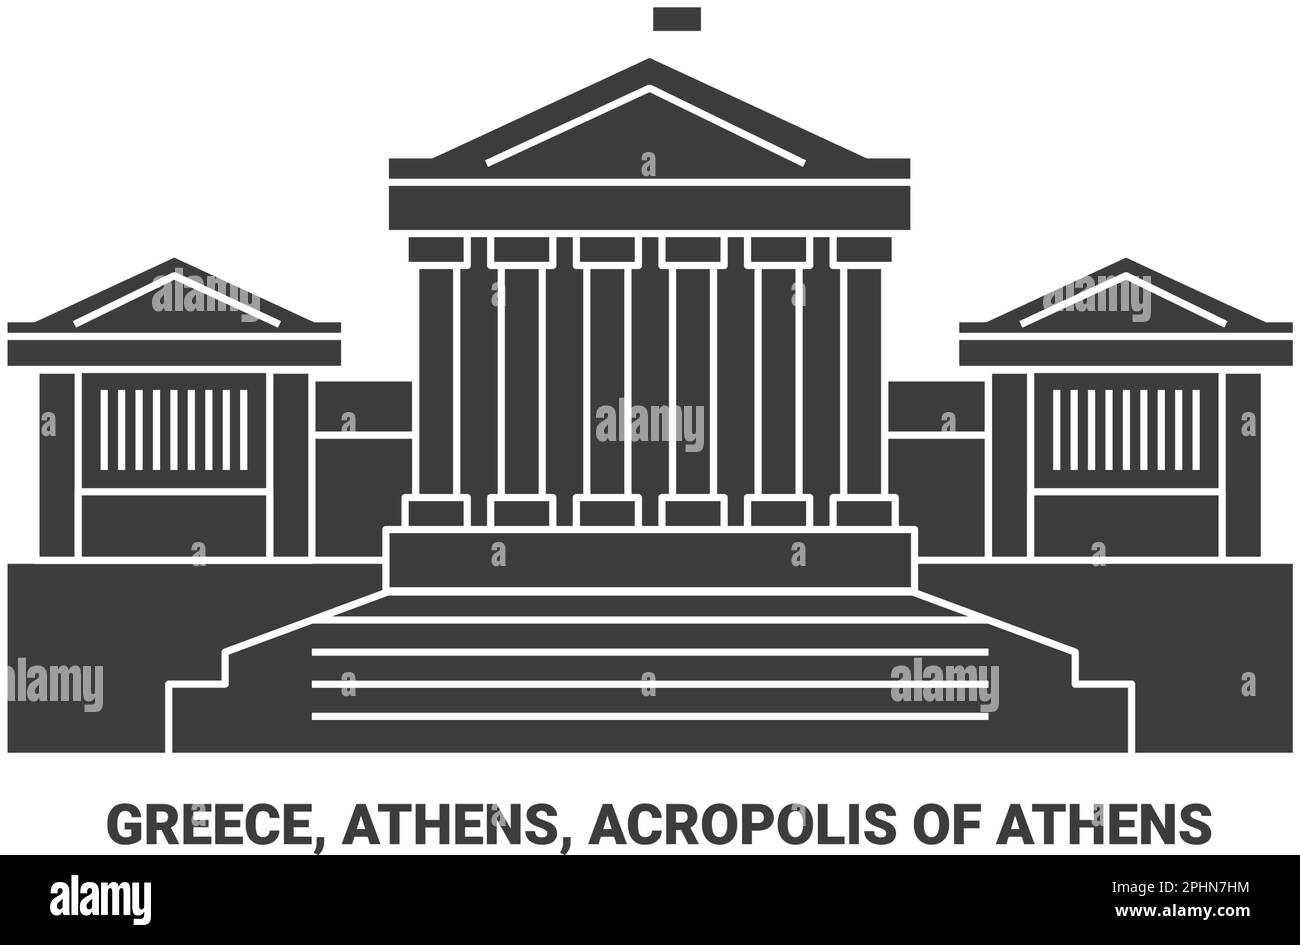 Greece, Athens, Acropolis Of Athens travel landmark vector illustration Stock Vector